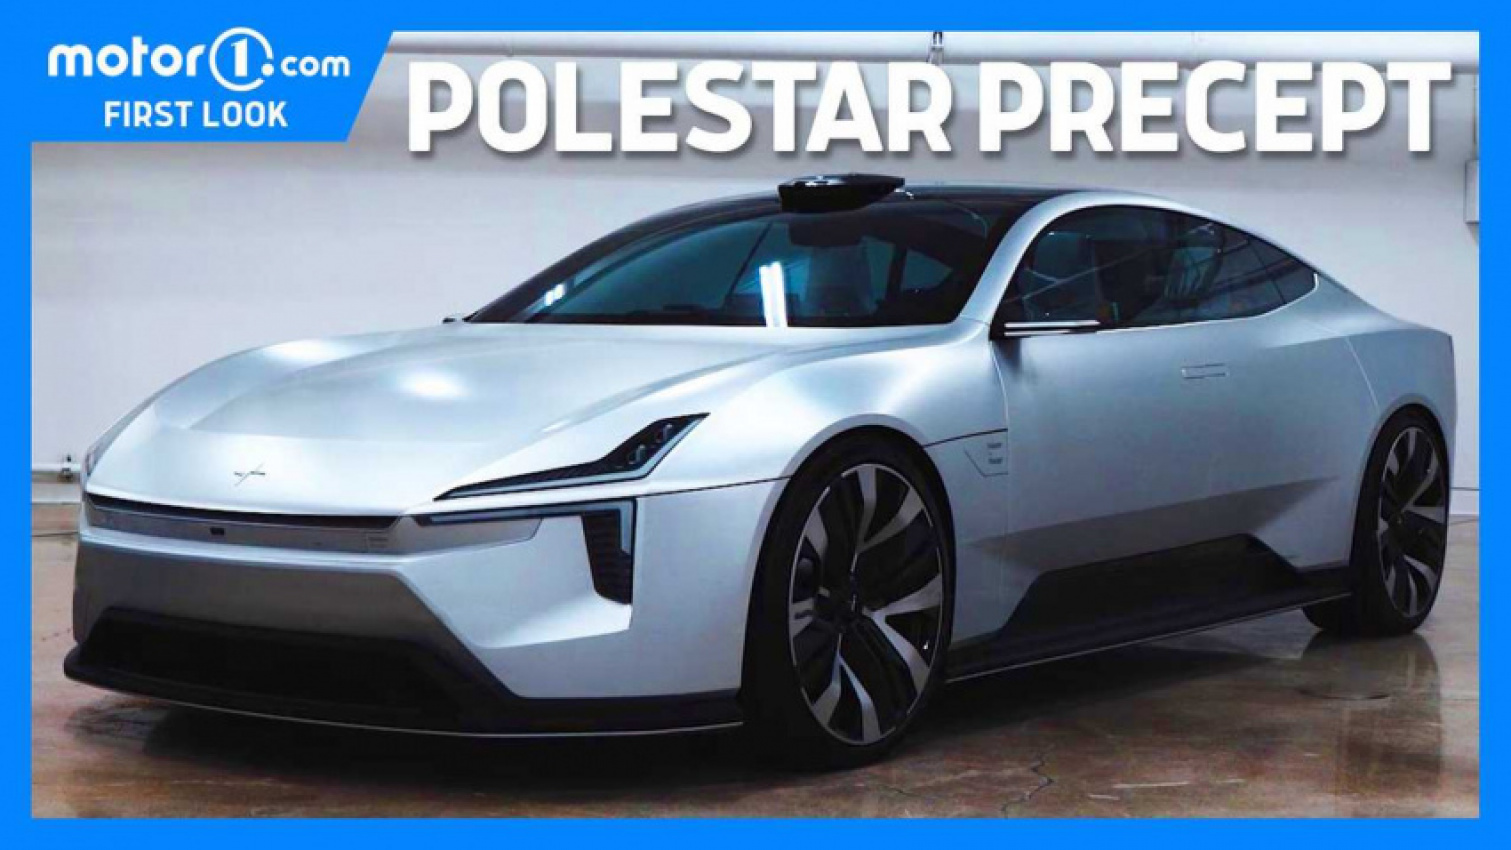 autos, cars, polestar, we take an up-close look at the polestar precept concept